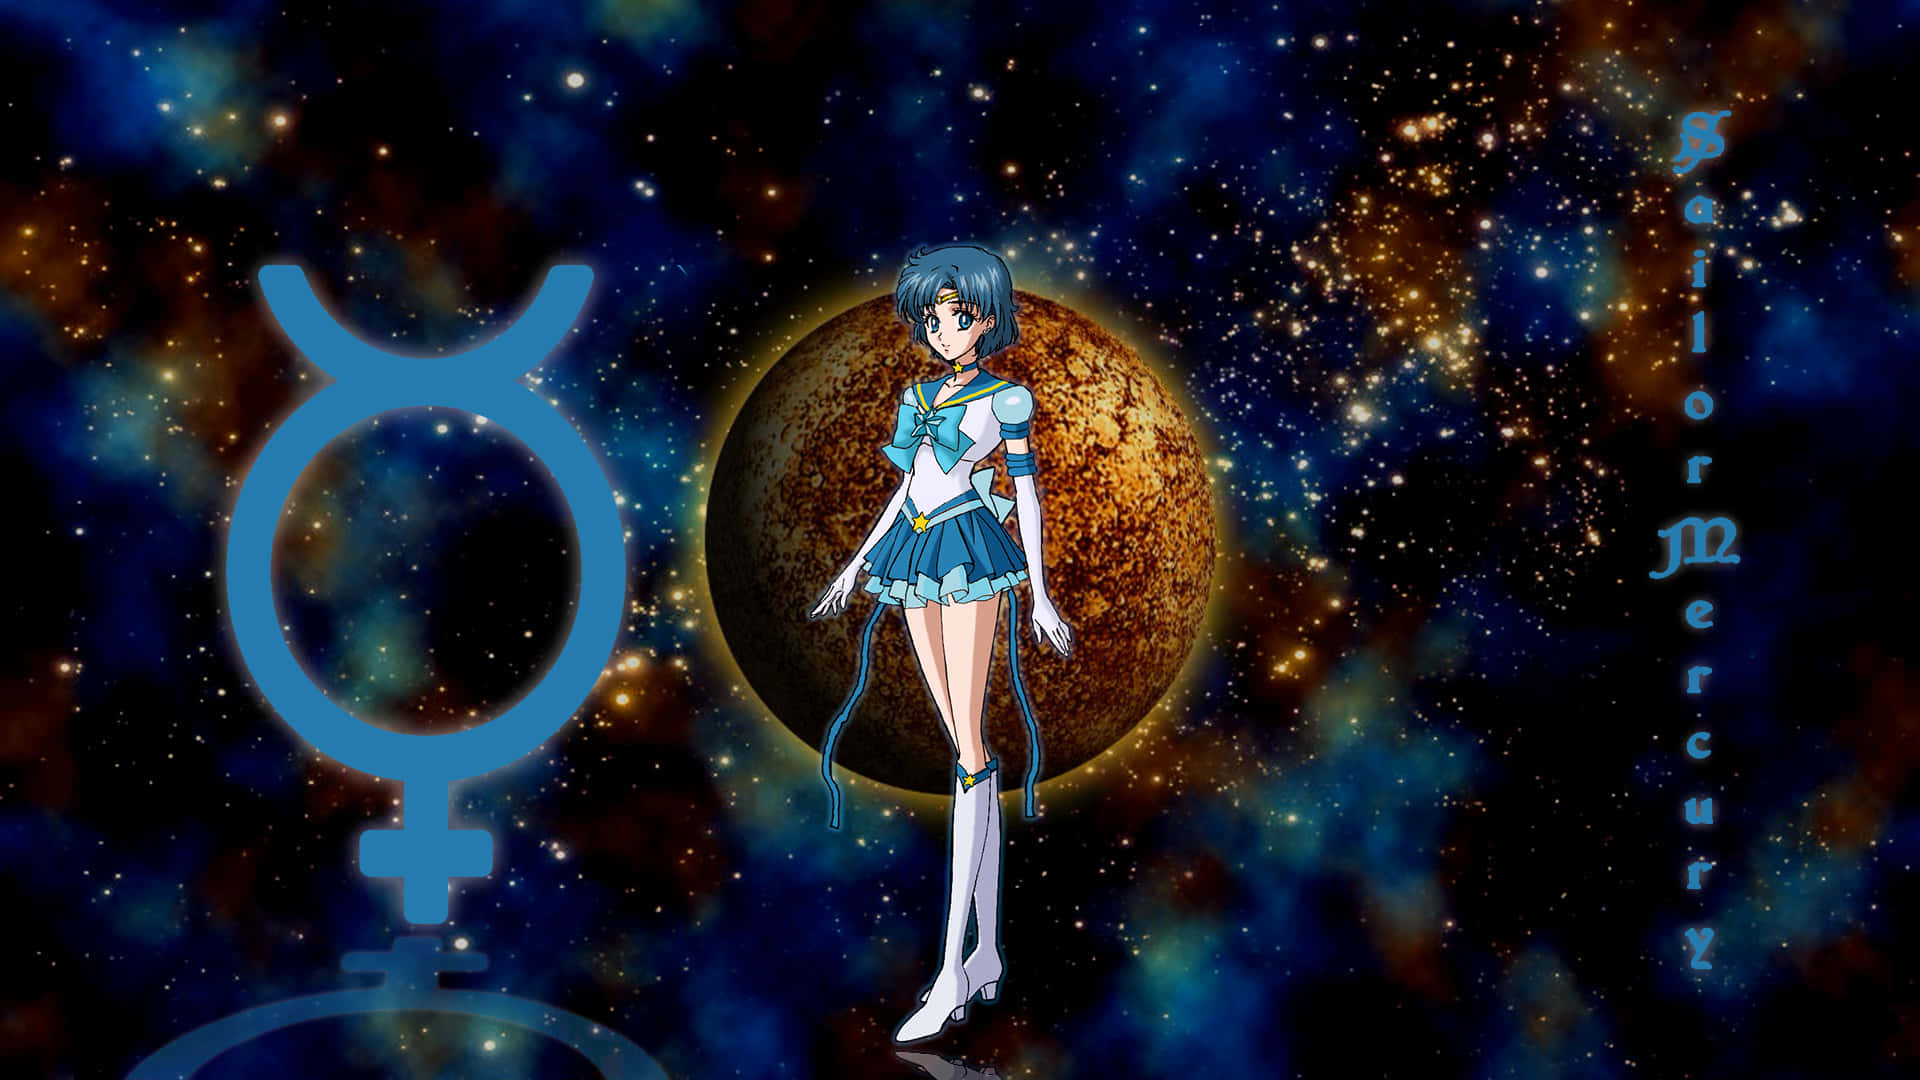 Taurus Sign With Sailor Mercury